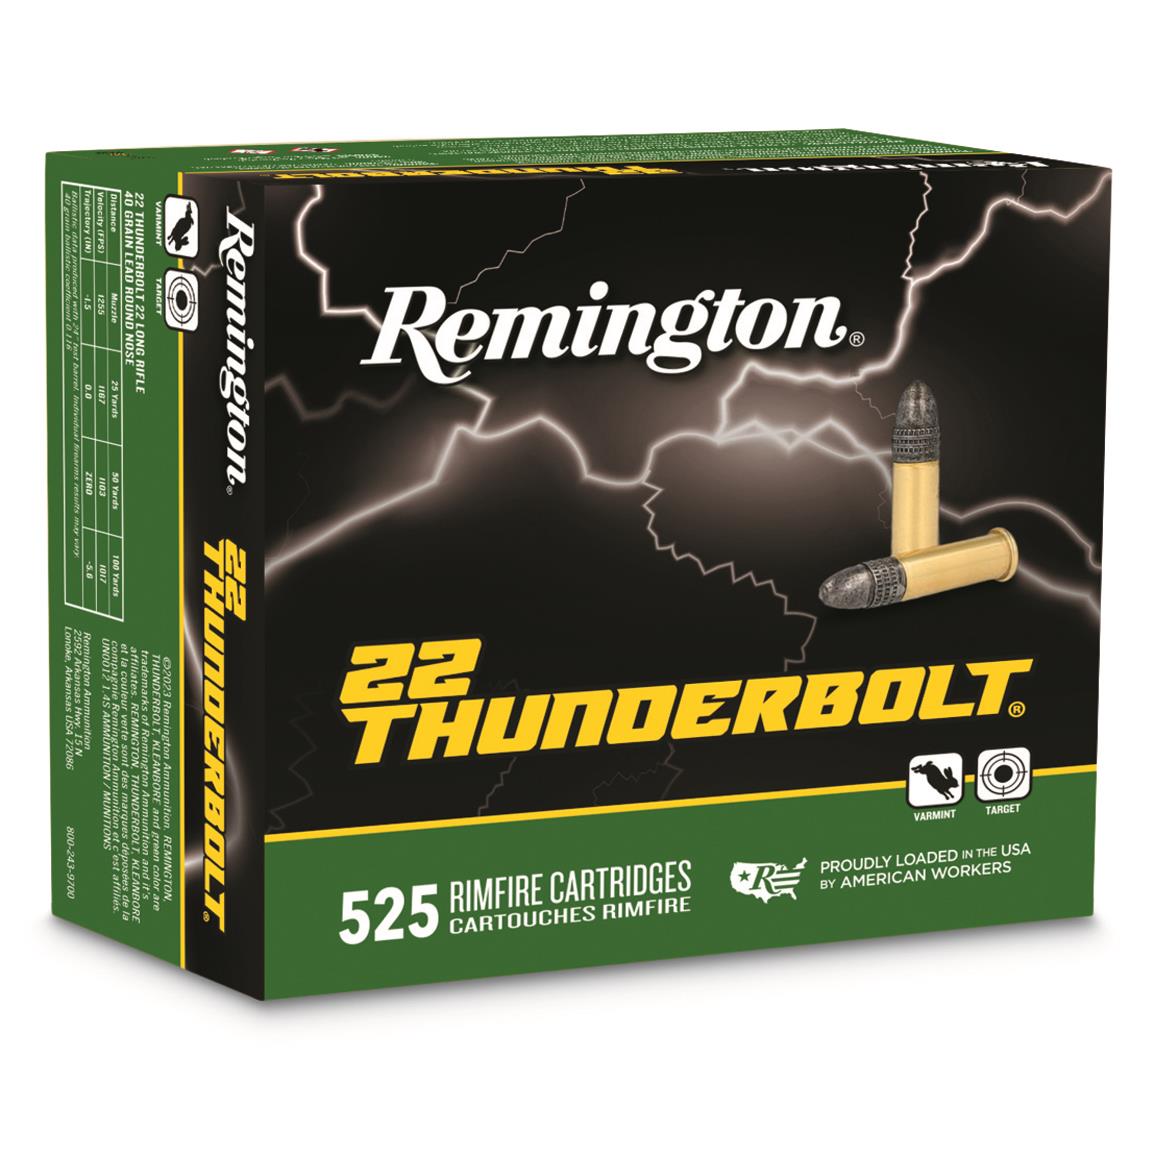 Remington 22 Thunderbolt, .22LR, LRN, 40 Grain, 525 Rounds